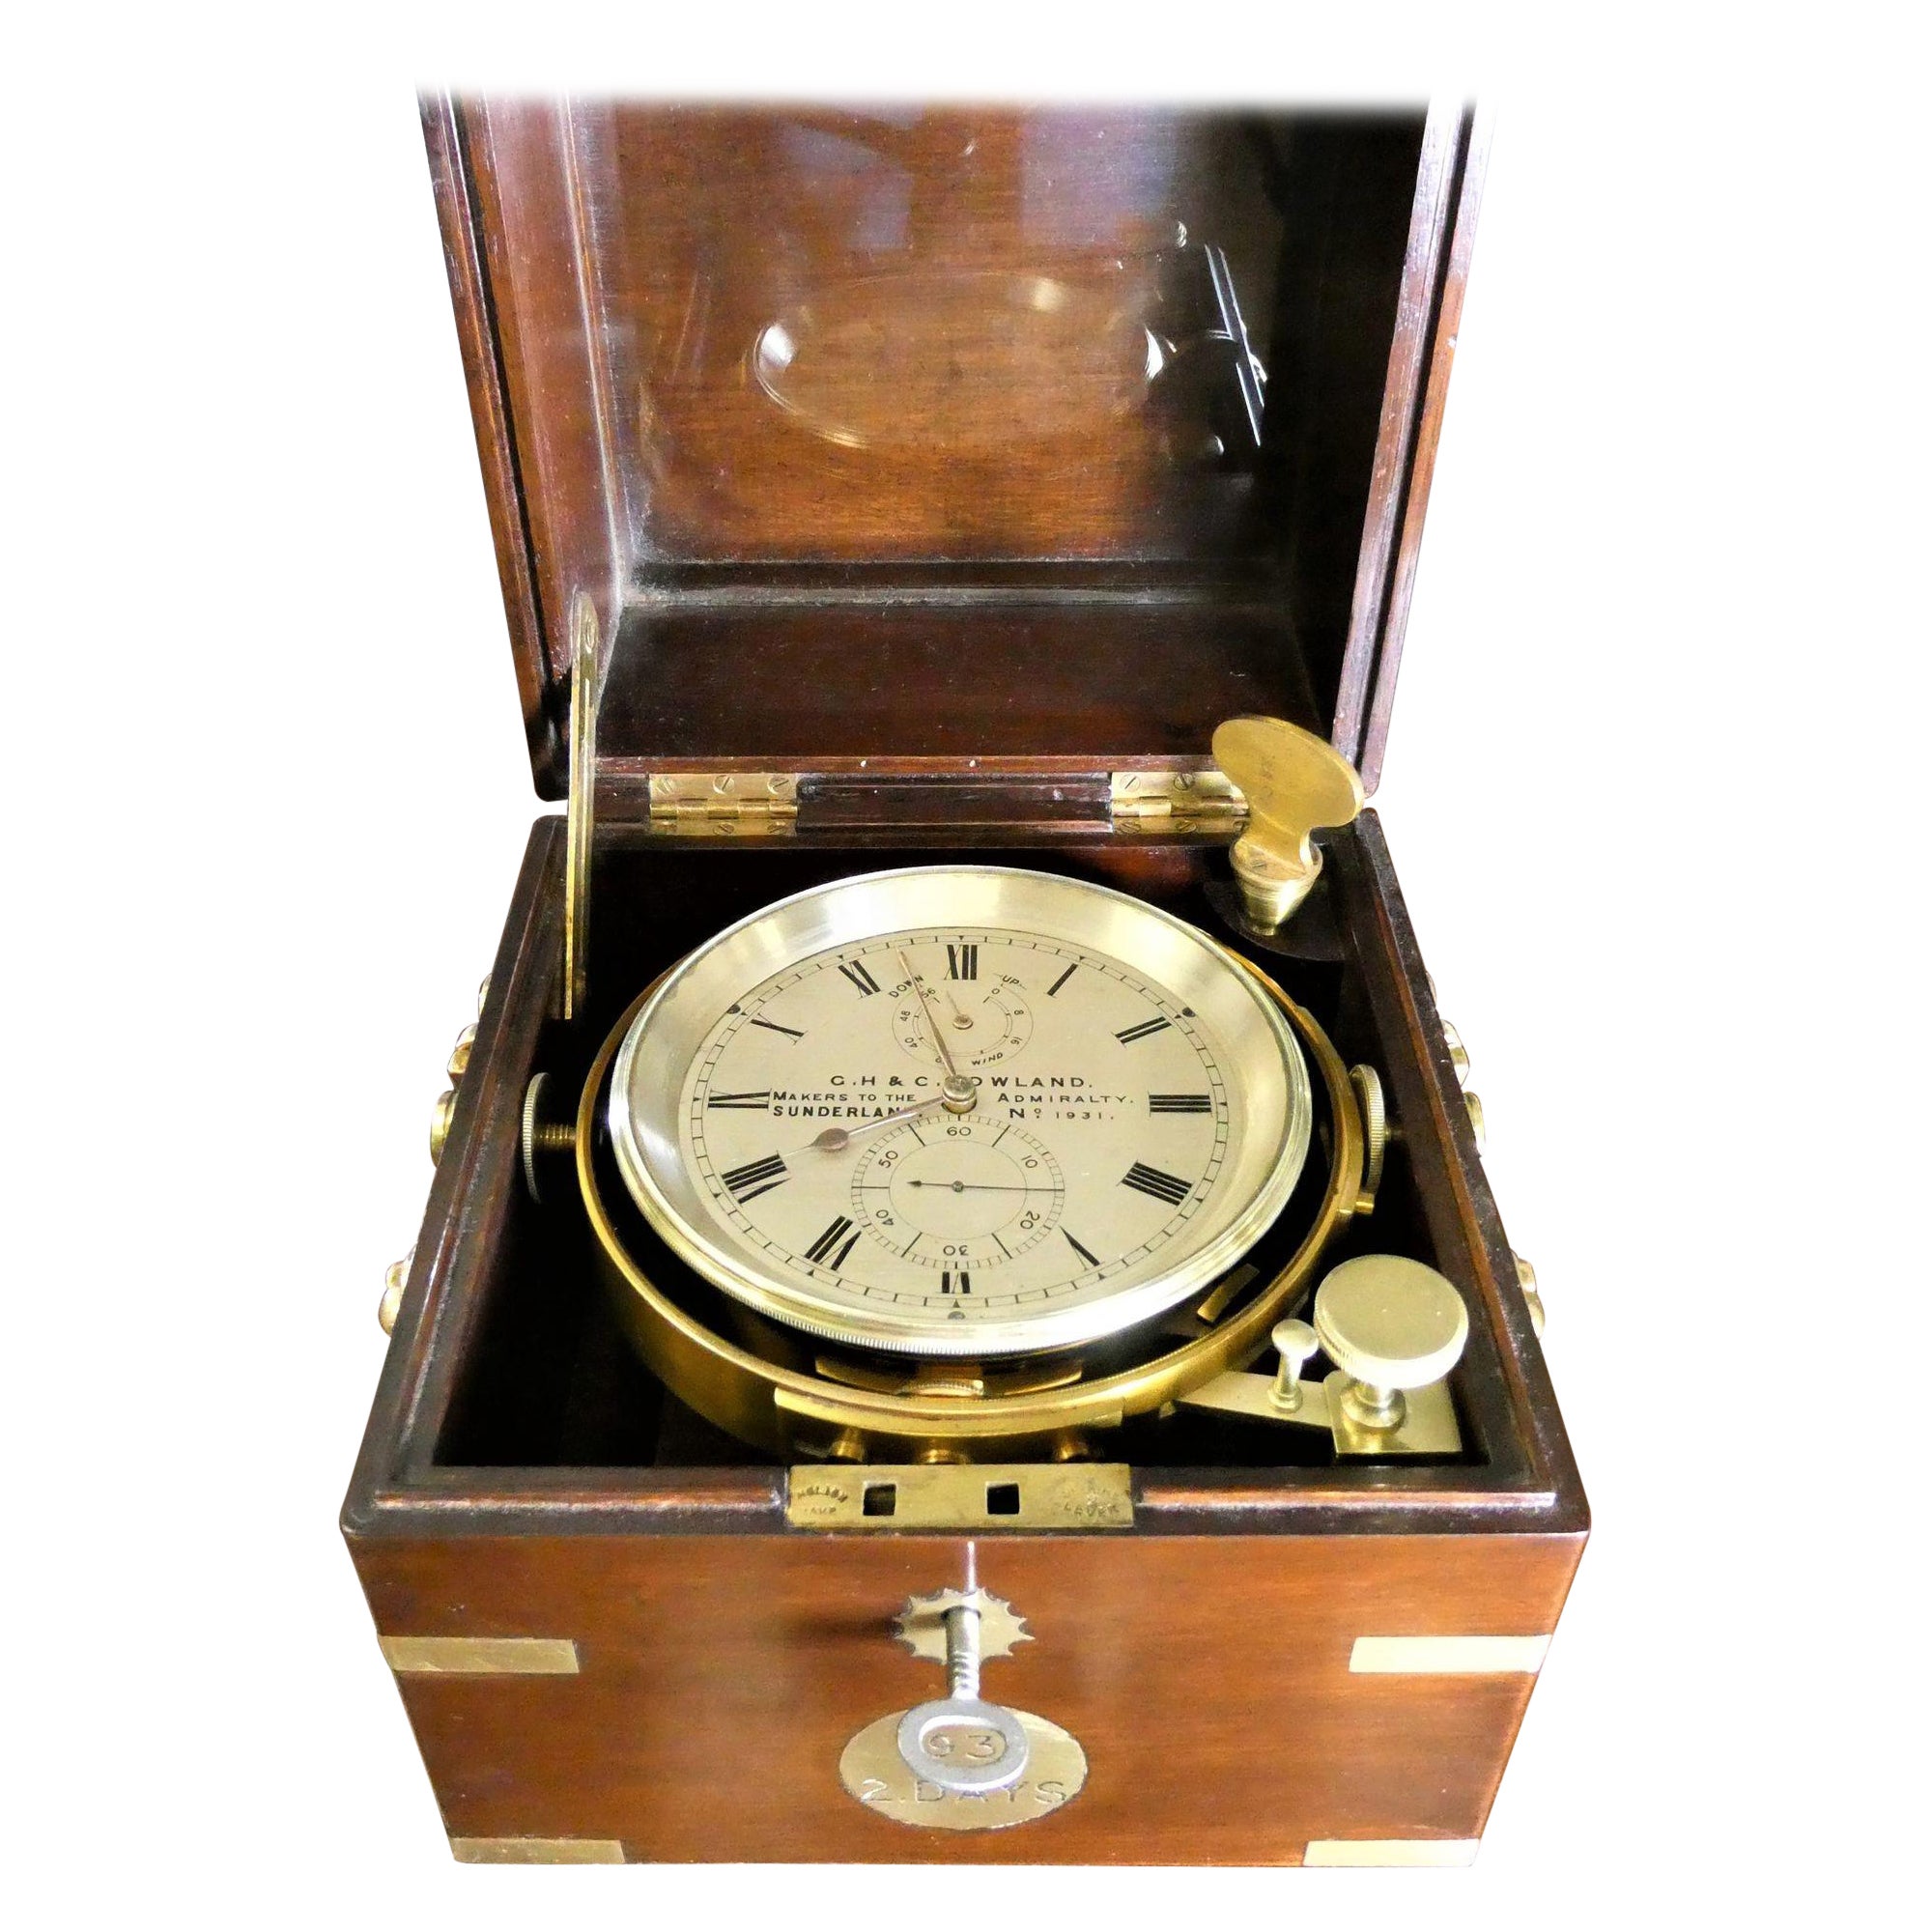 Two Day Marine Chronometer, G.H & C Gowland, Sunderland No.1931